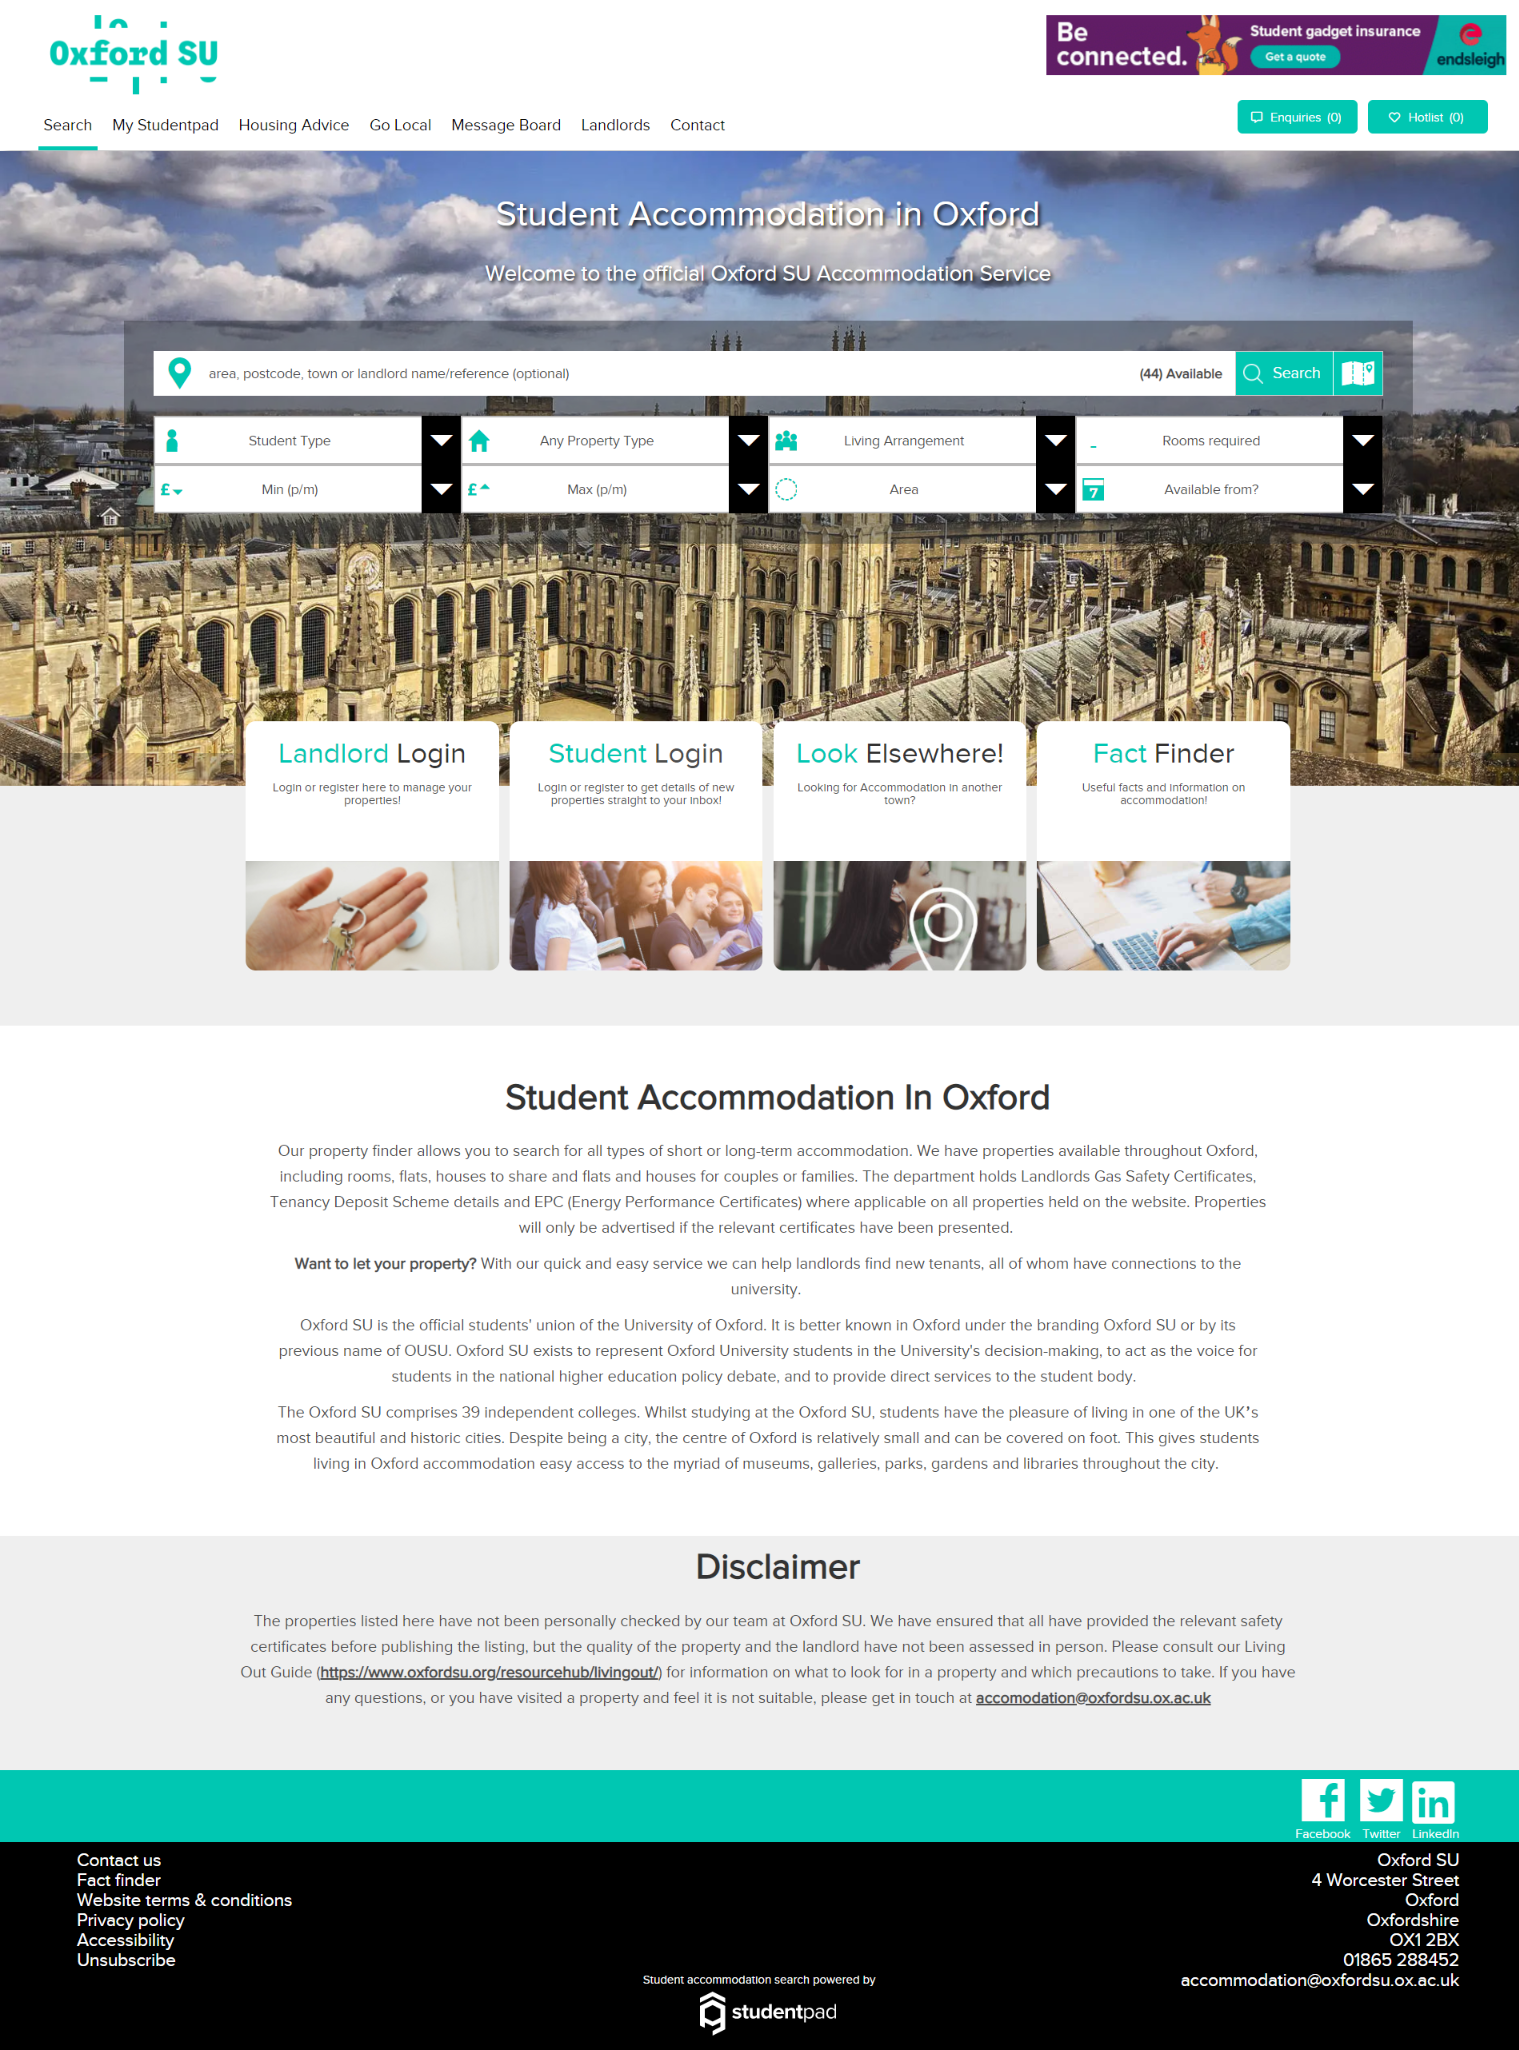 Example screenshot of Oxford Studentpad Website